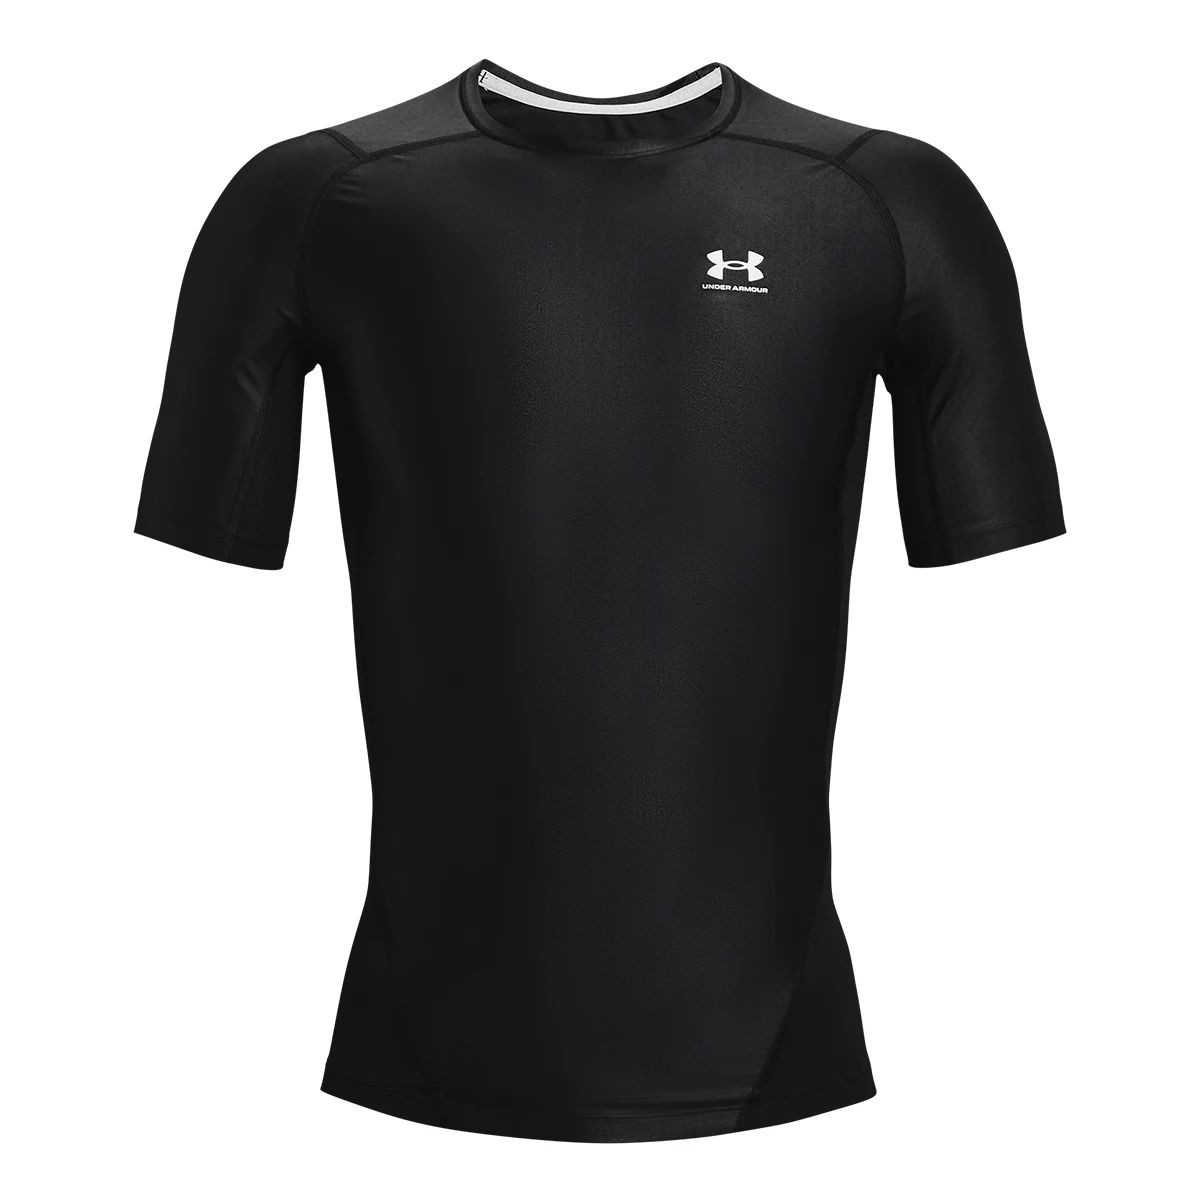 Under Armour Men's HeatGear® Isochill Compression T Shirt